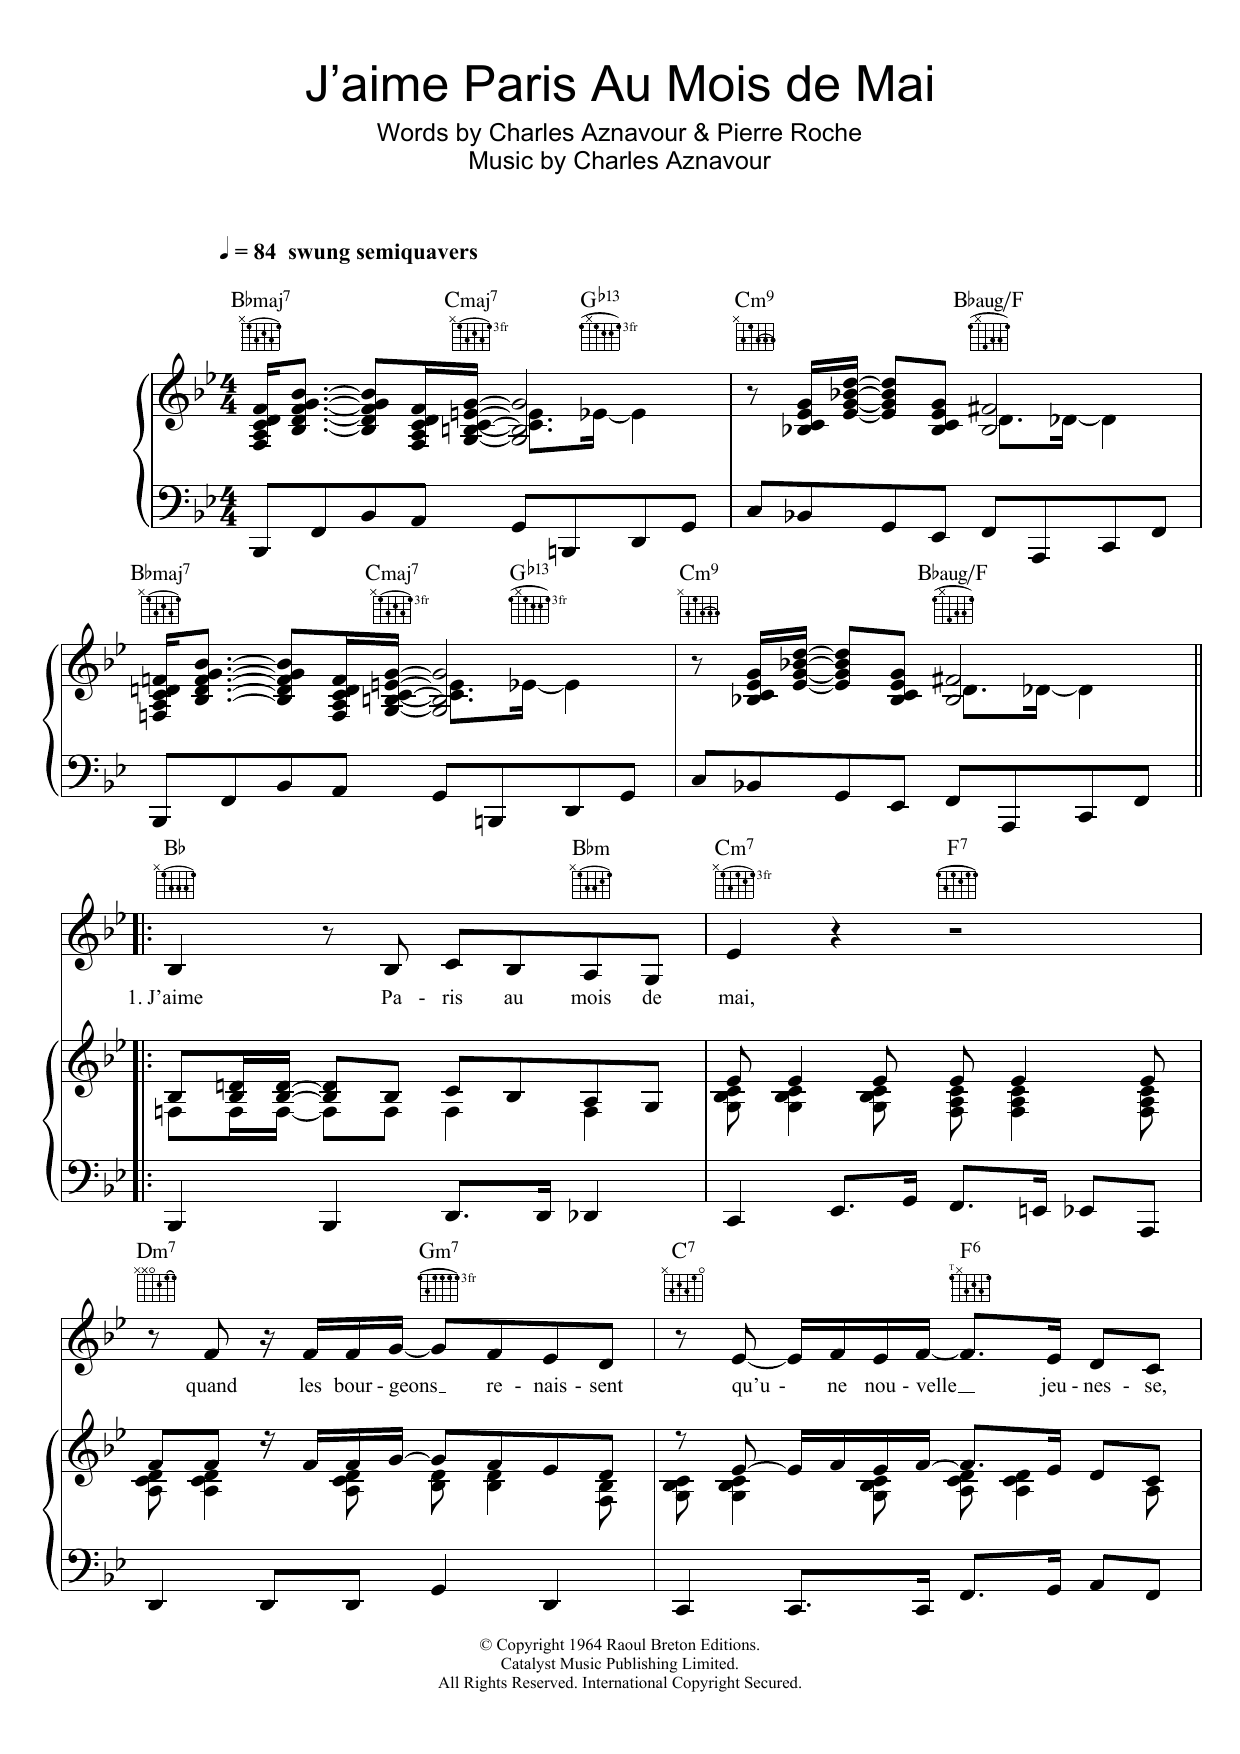 Zaz J'aime Paris Au Mois De Mai Sheet Music Notes & Chords for Piano, Vocal & Guitar (Right-Hand Melody) - Download or Print PDF